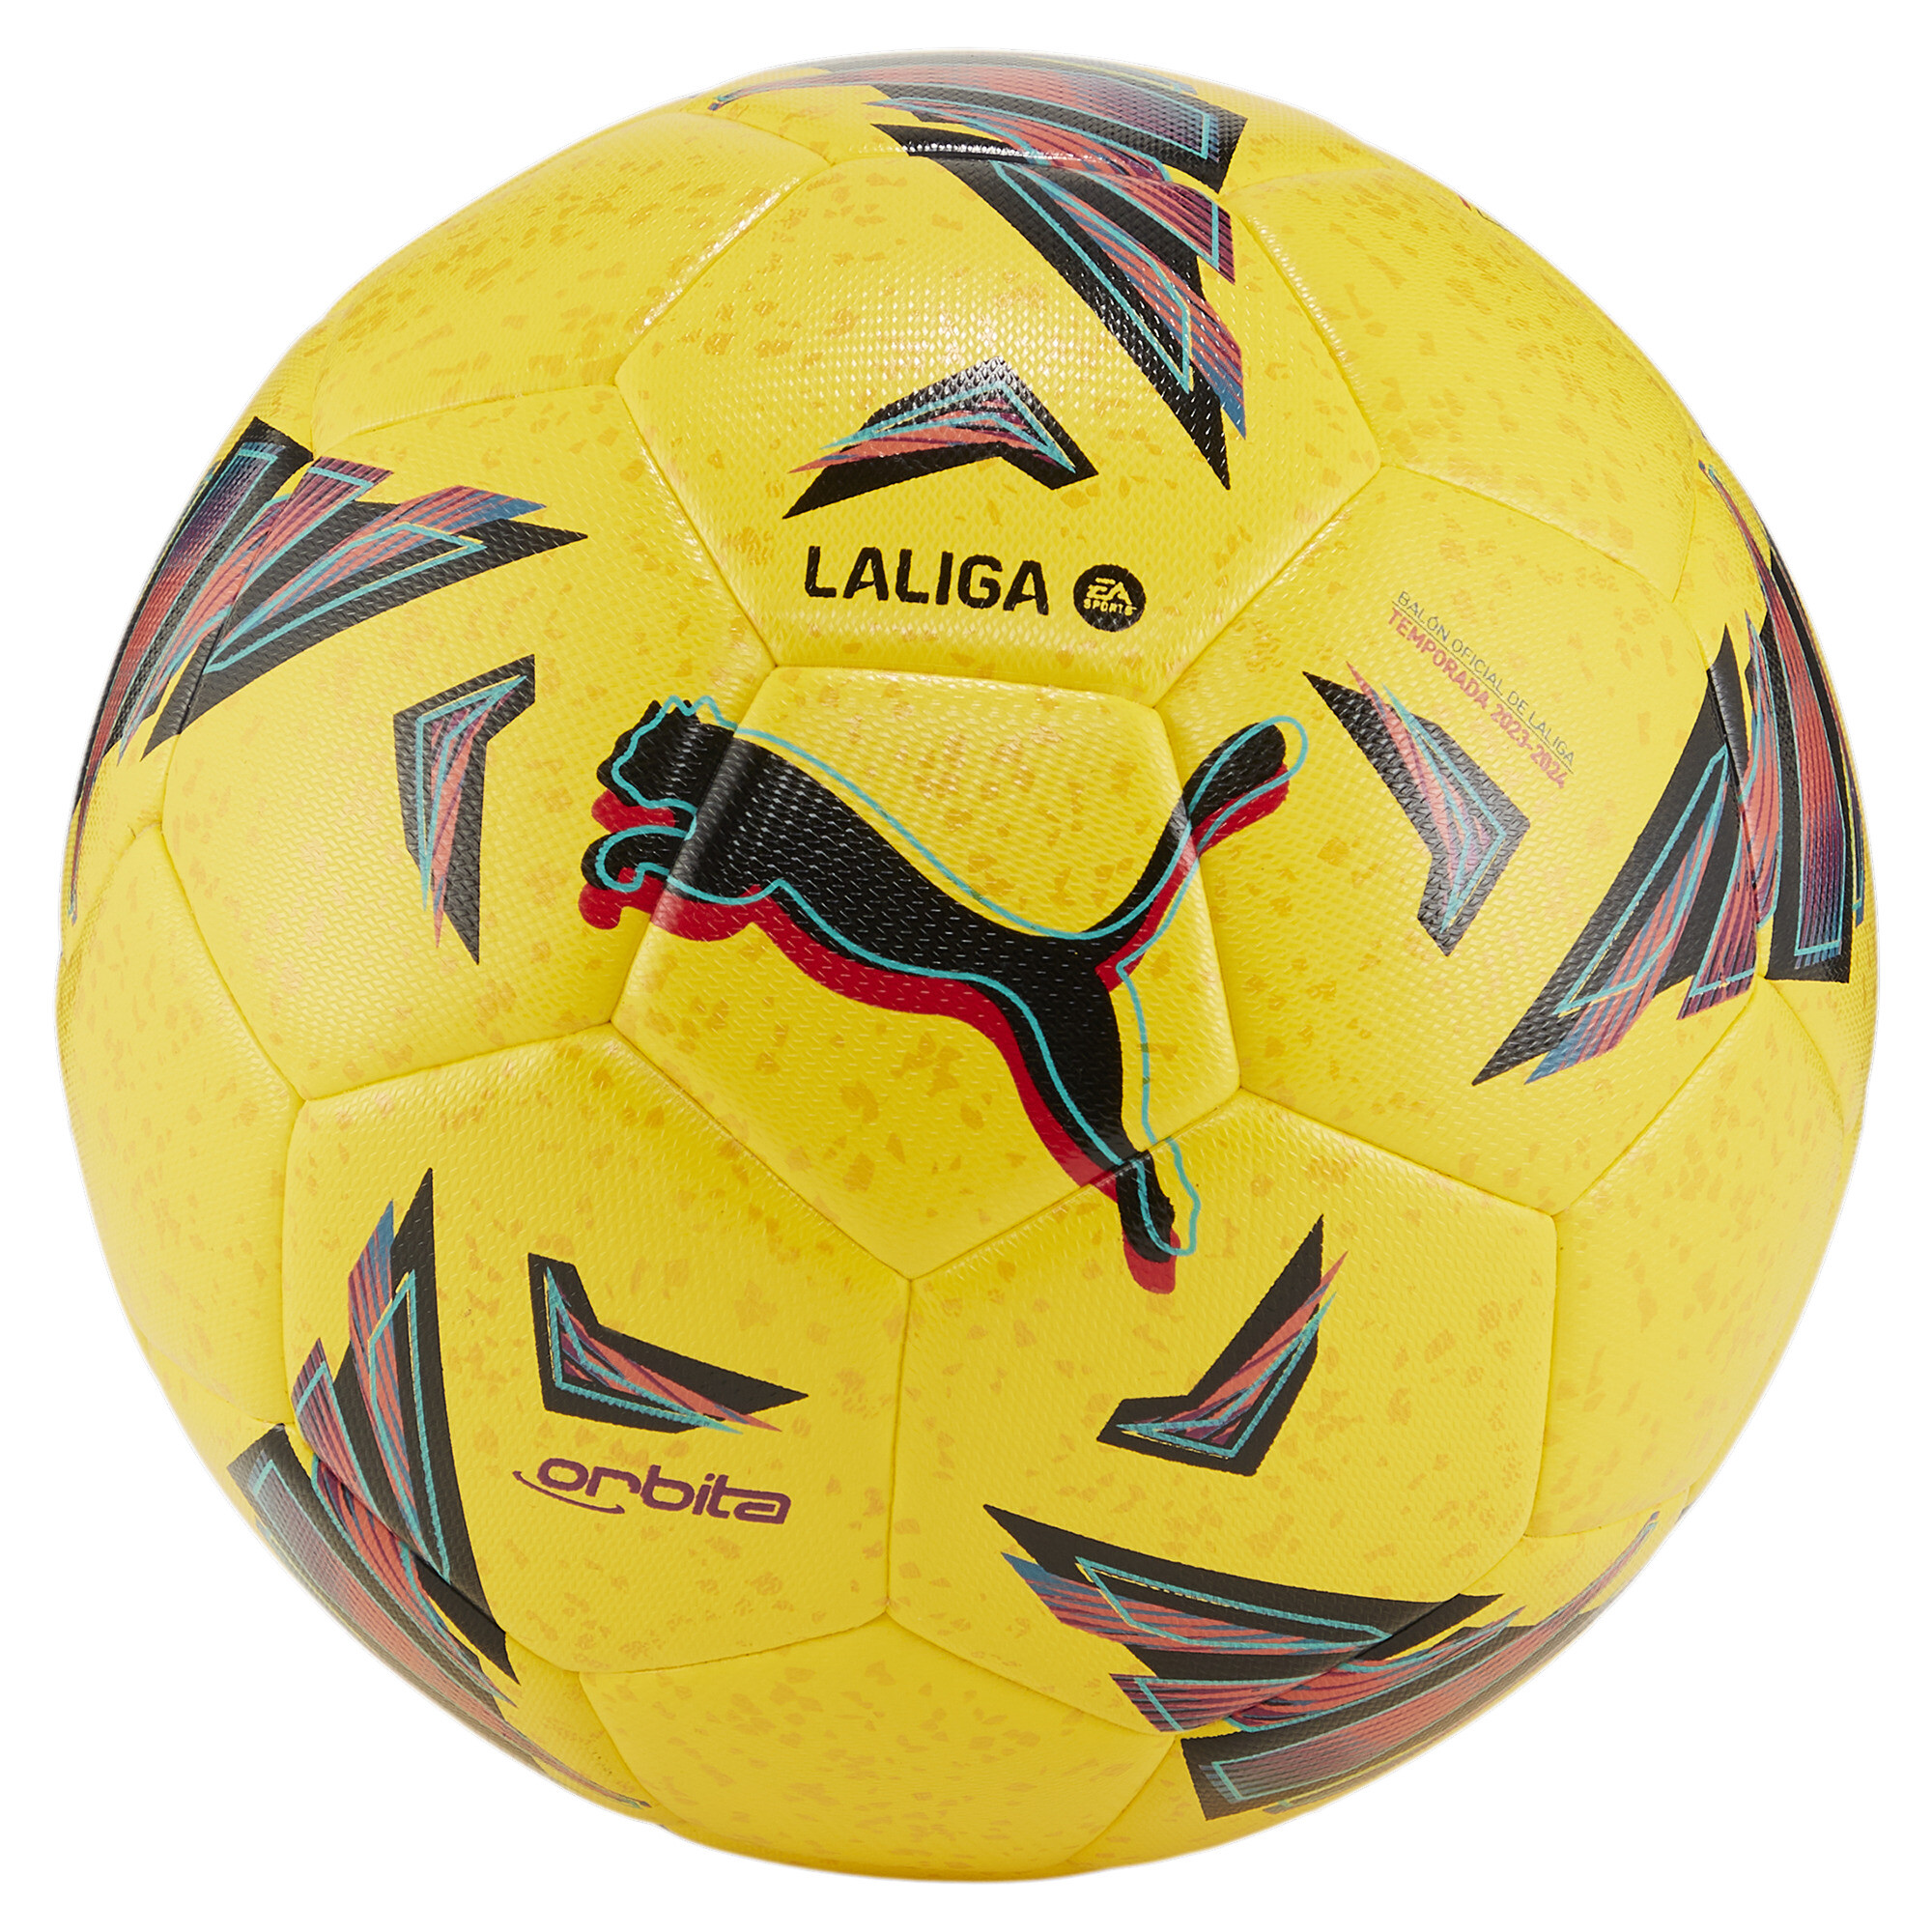 Puma Orbita La Liga Hybrid Training Football, Yellow, Size 4, Accessories